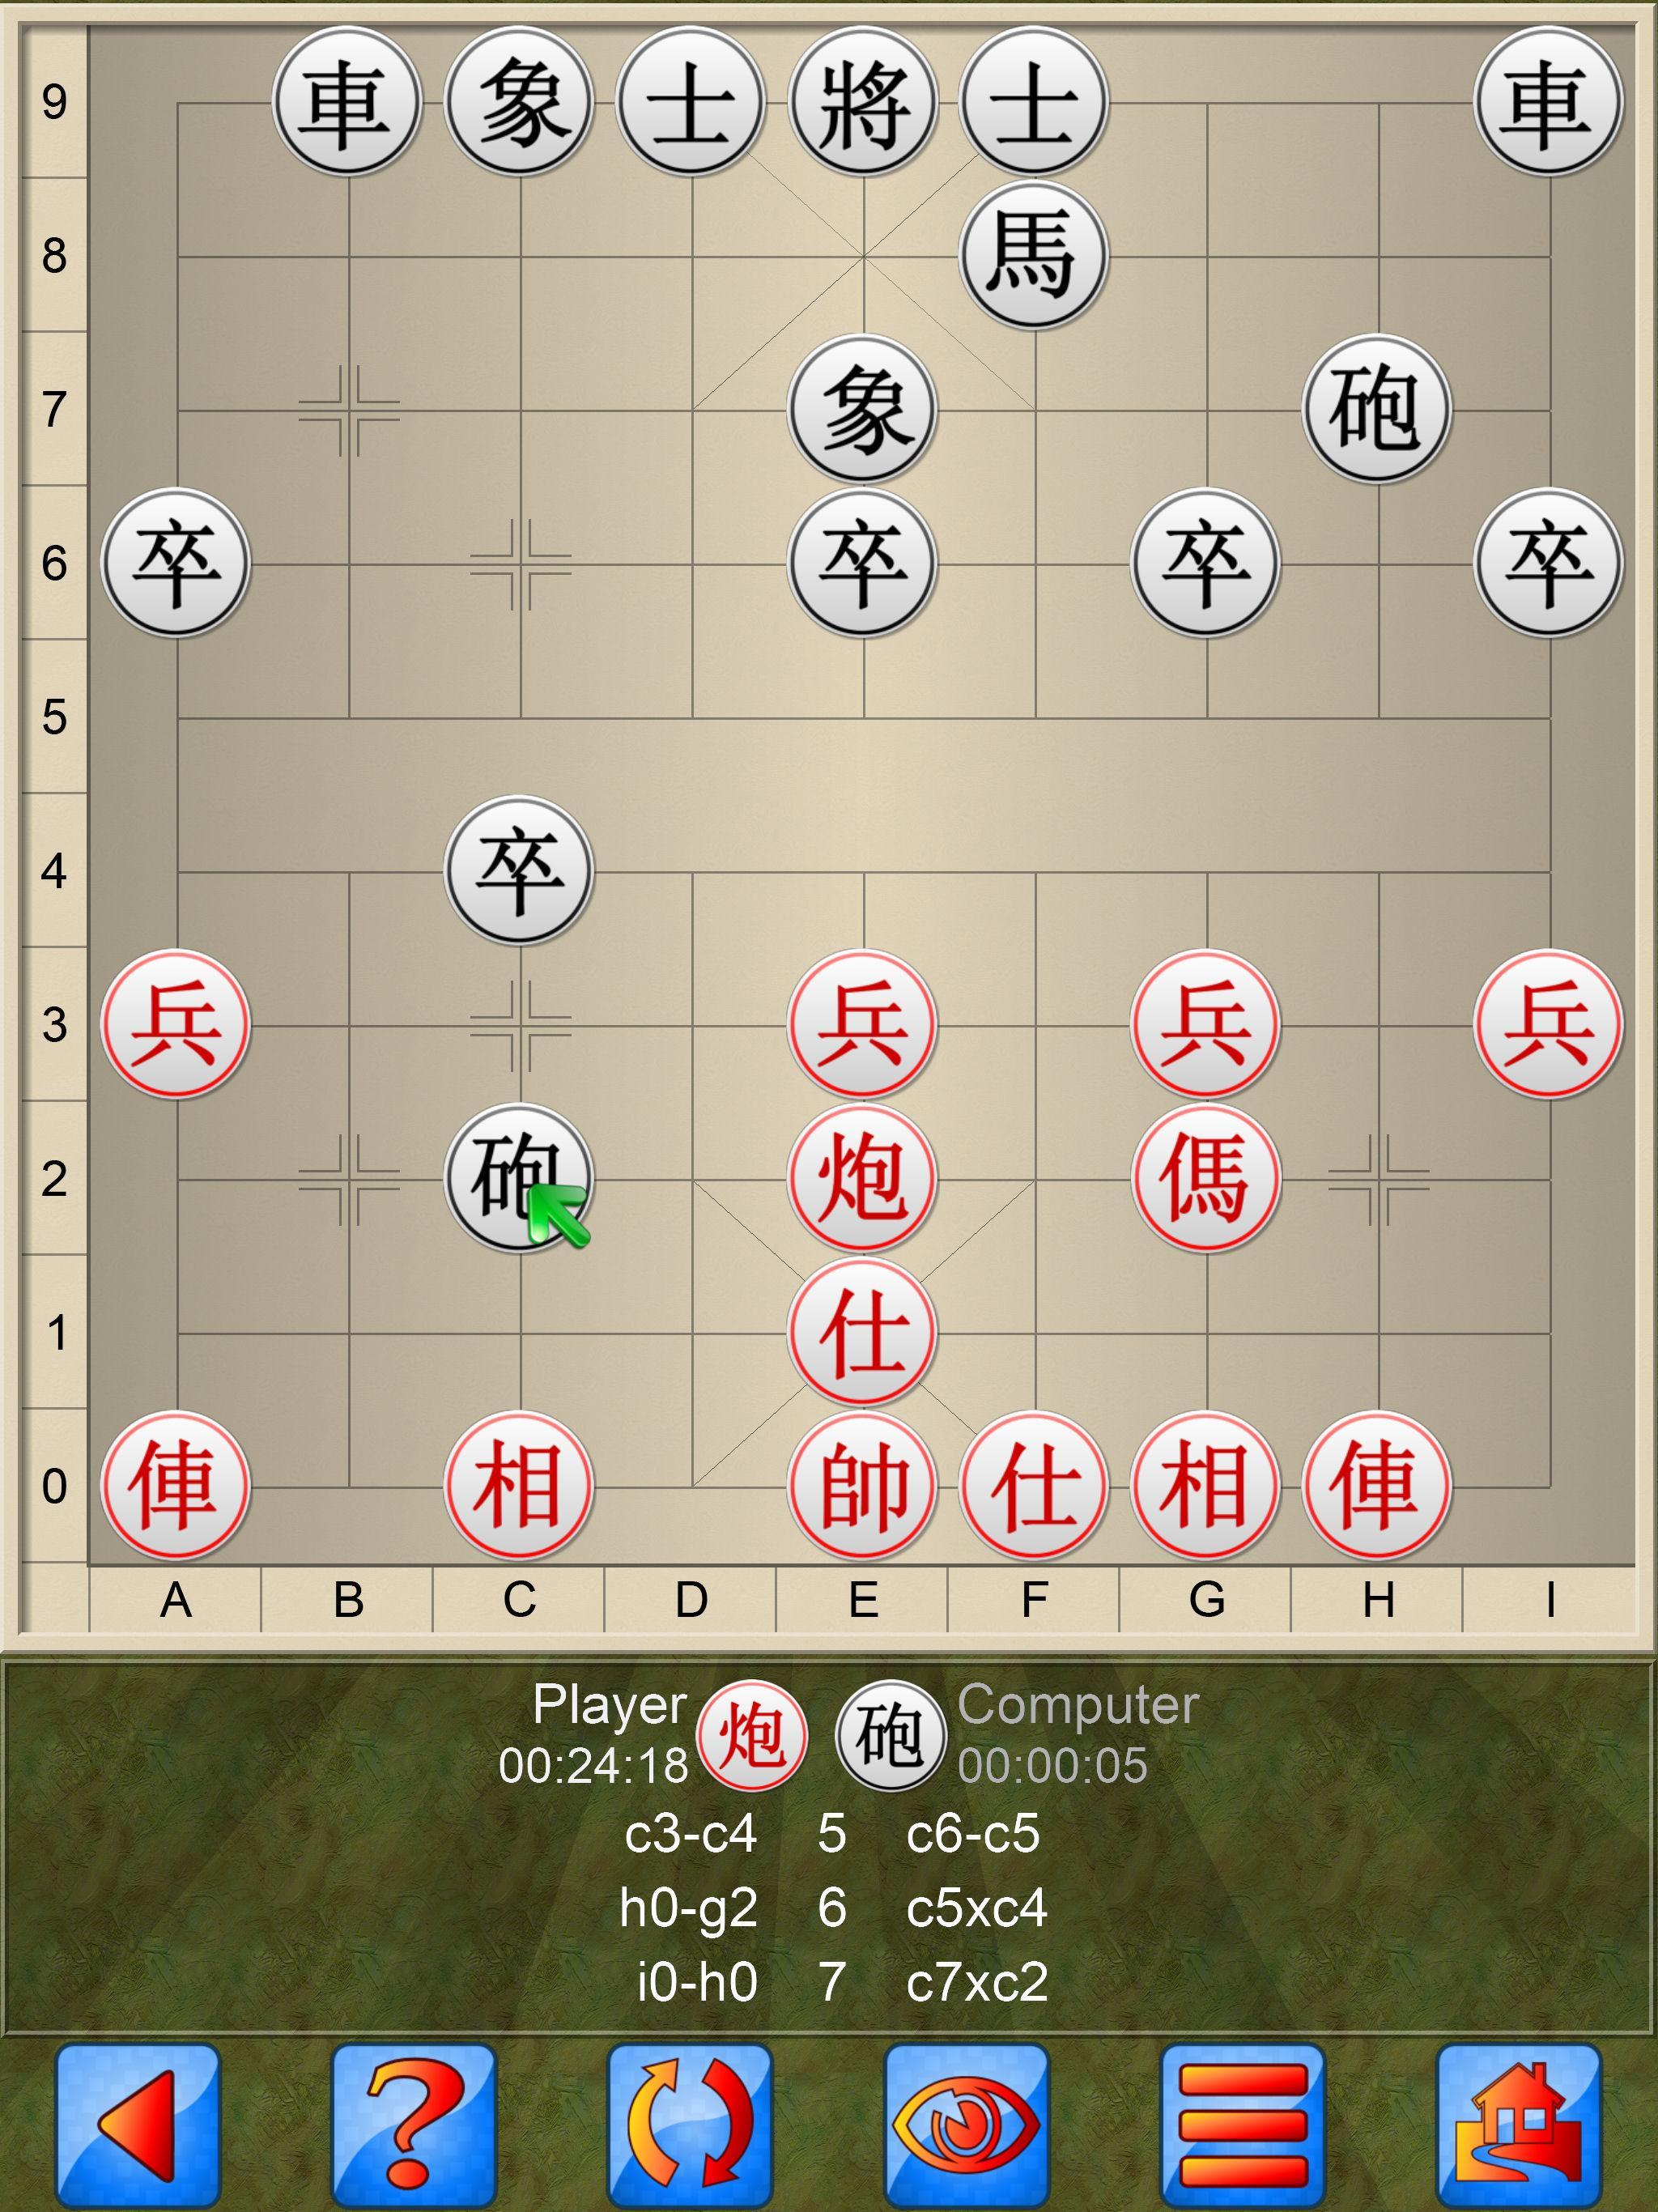 Chinese Chess V+, multiplayer Xiangqi board game 5.25.65 Screenshot 16